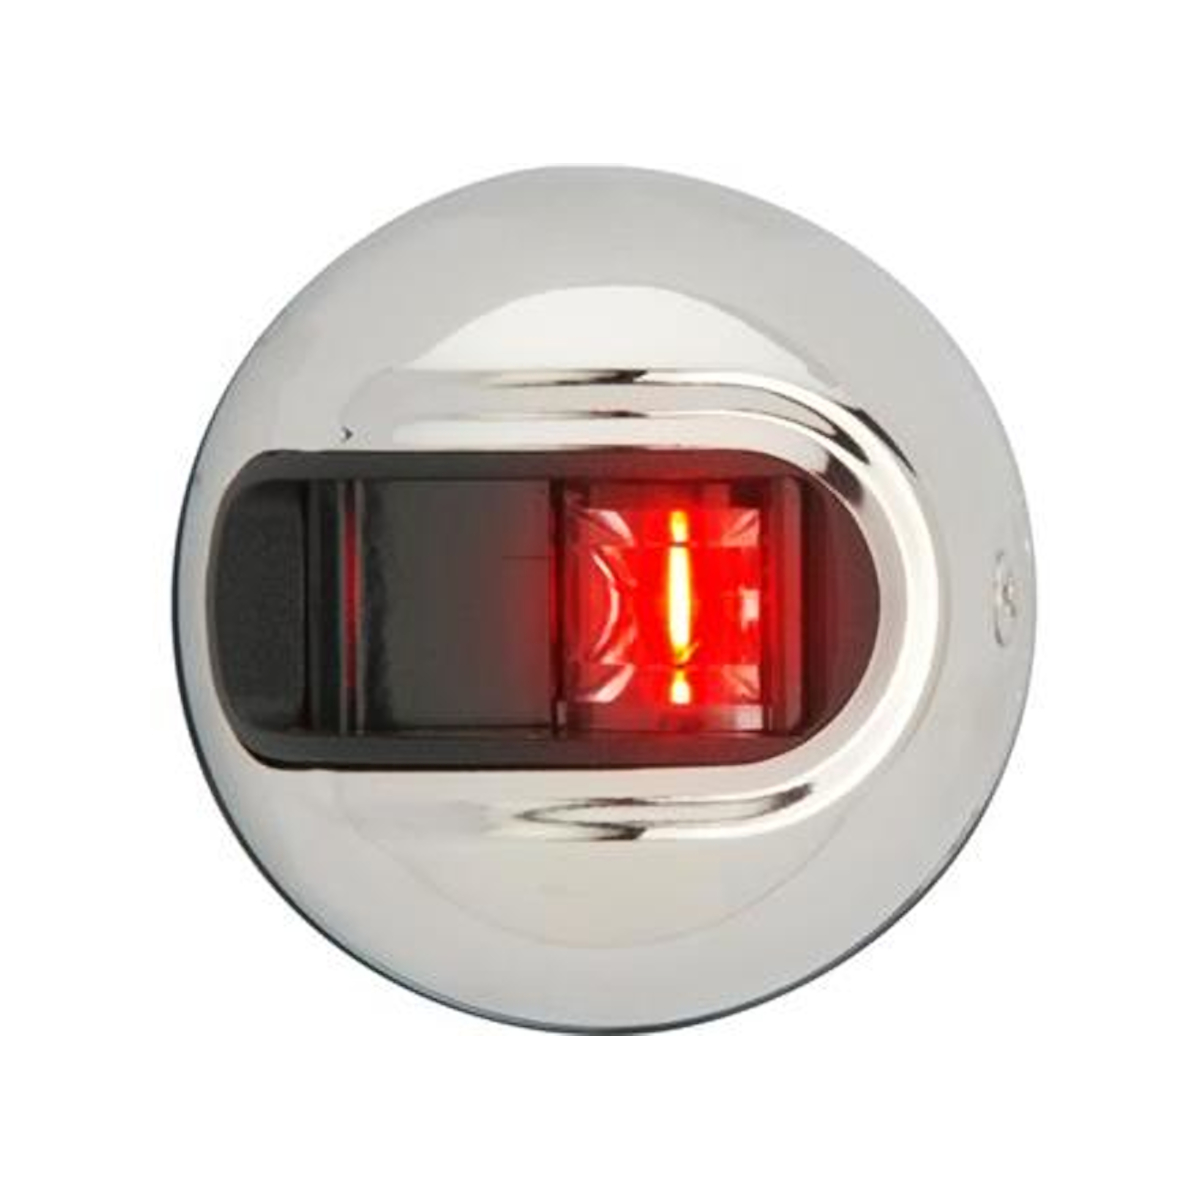 Attwood navigatieverlichting LightArmor LED bakboord zijmontage rond – RVS